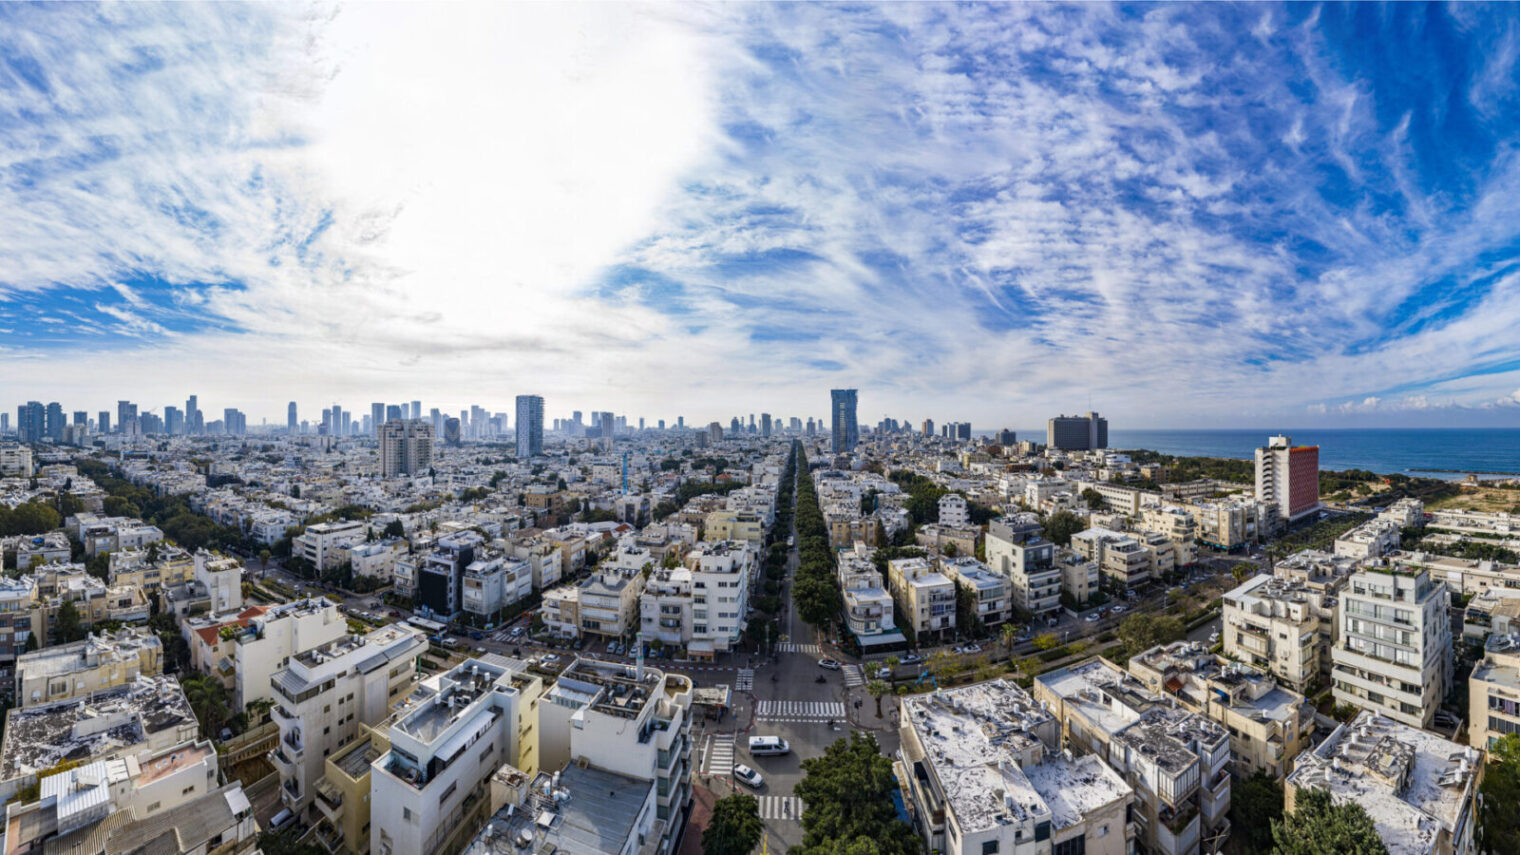 Tel Aviv from the air. Photo courtesy of Tel Aviv Municipality